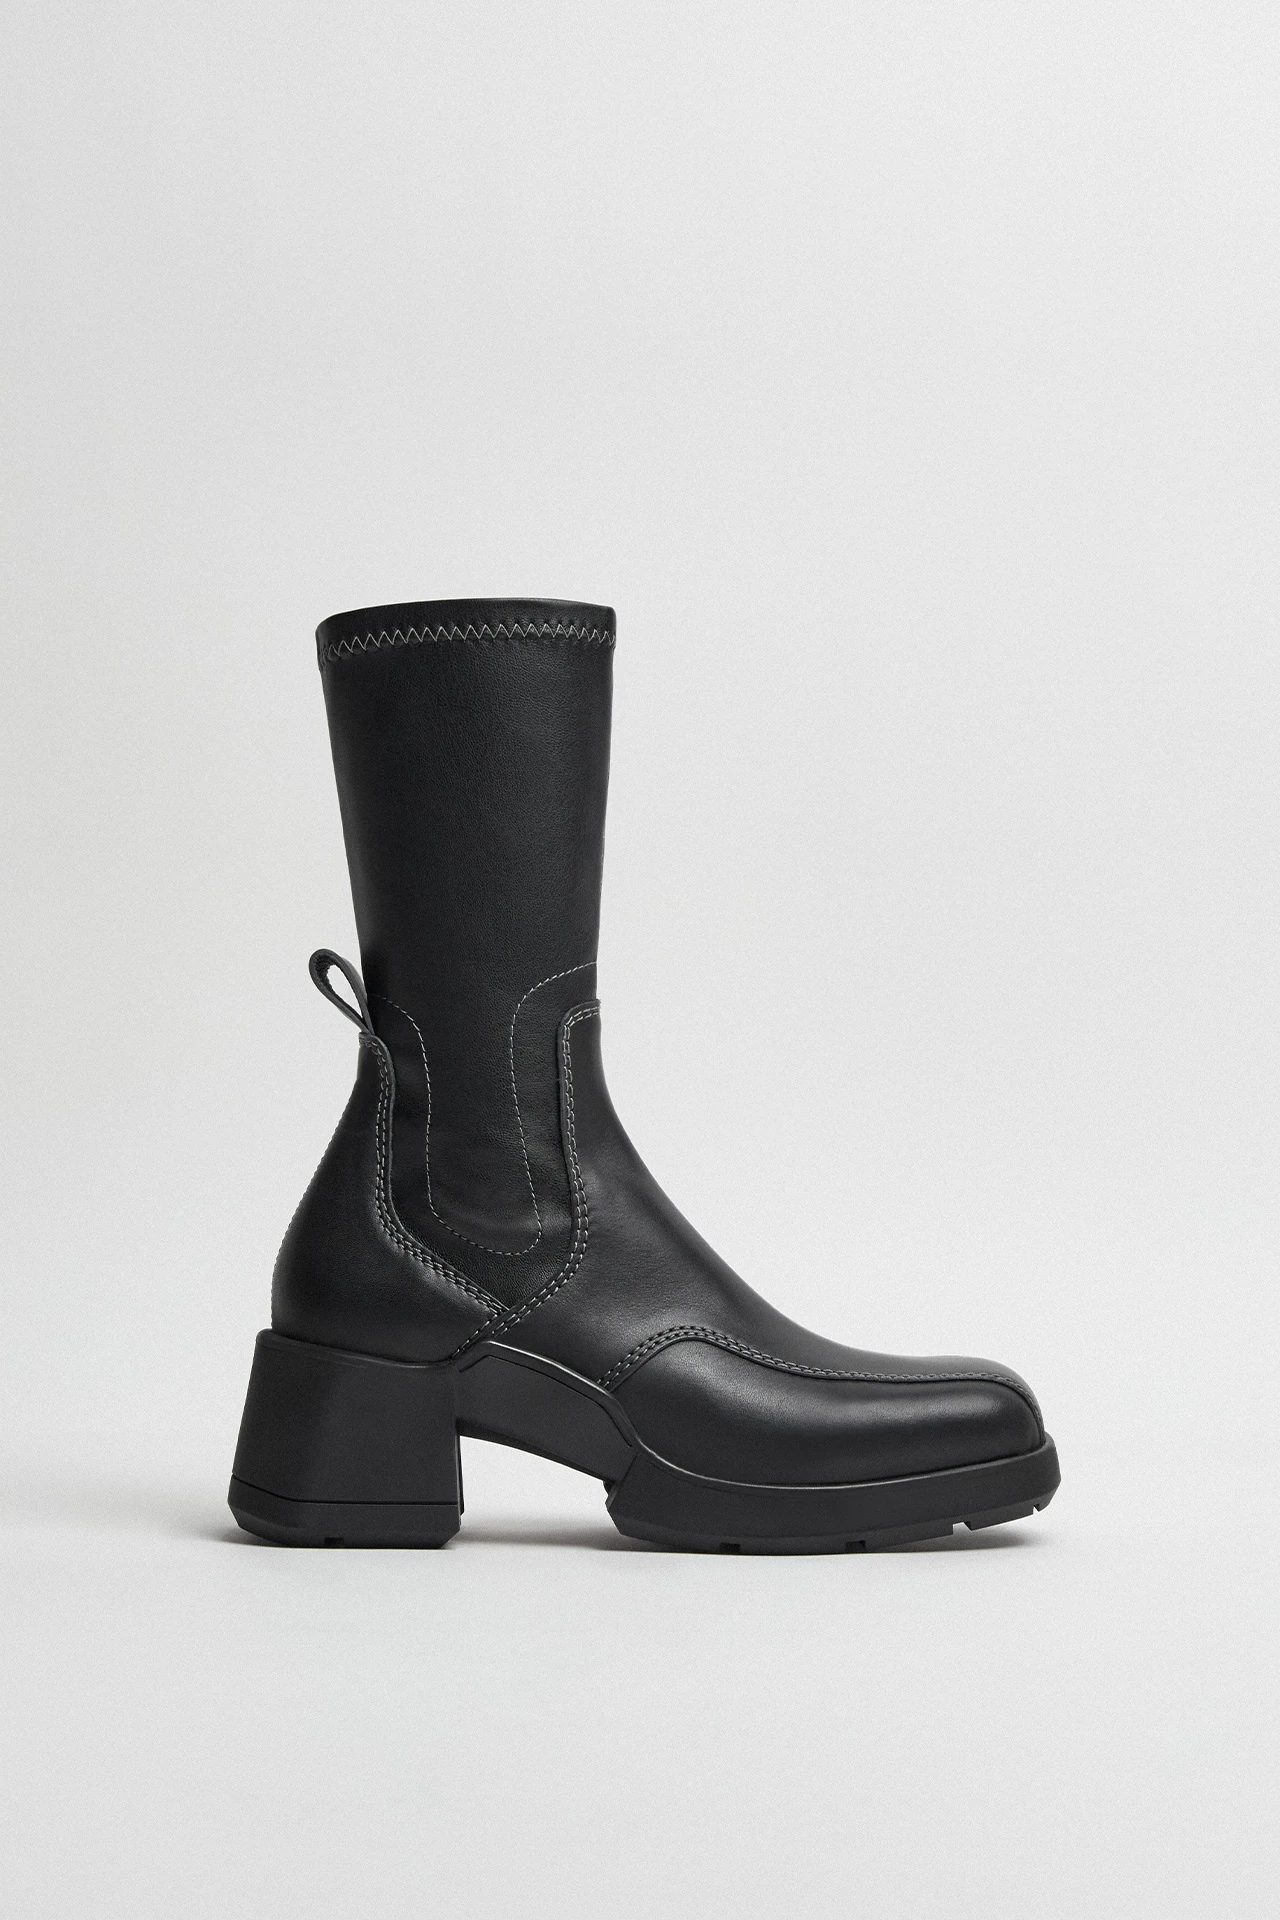 E8-viken-black-boots-01